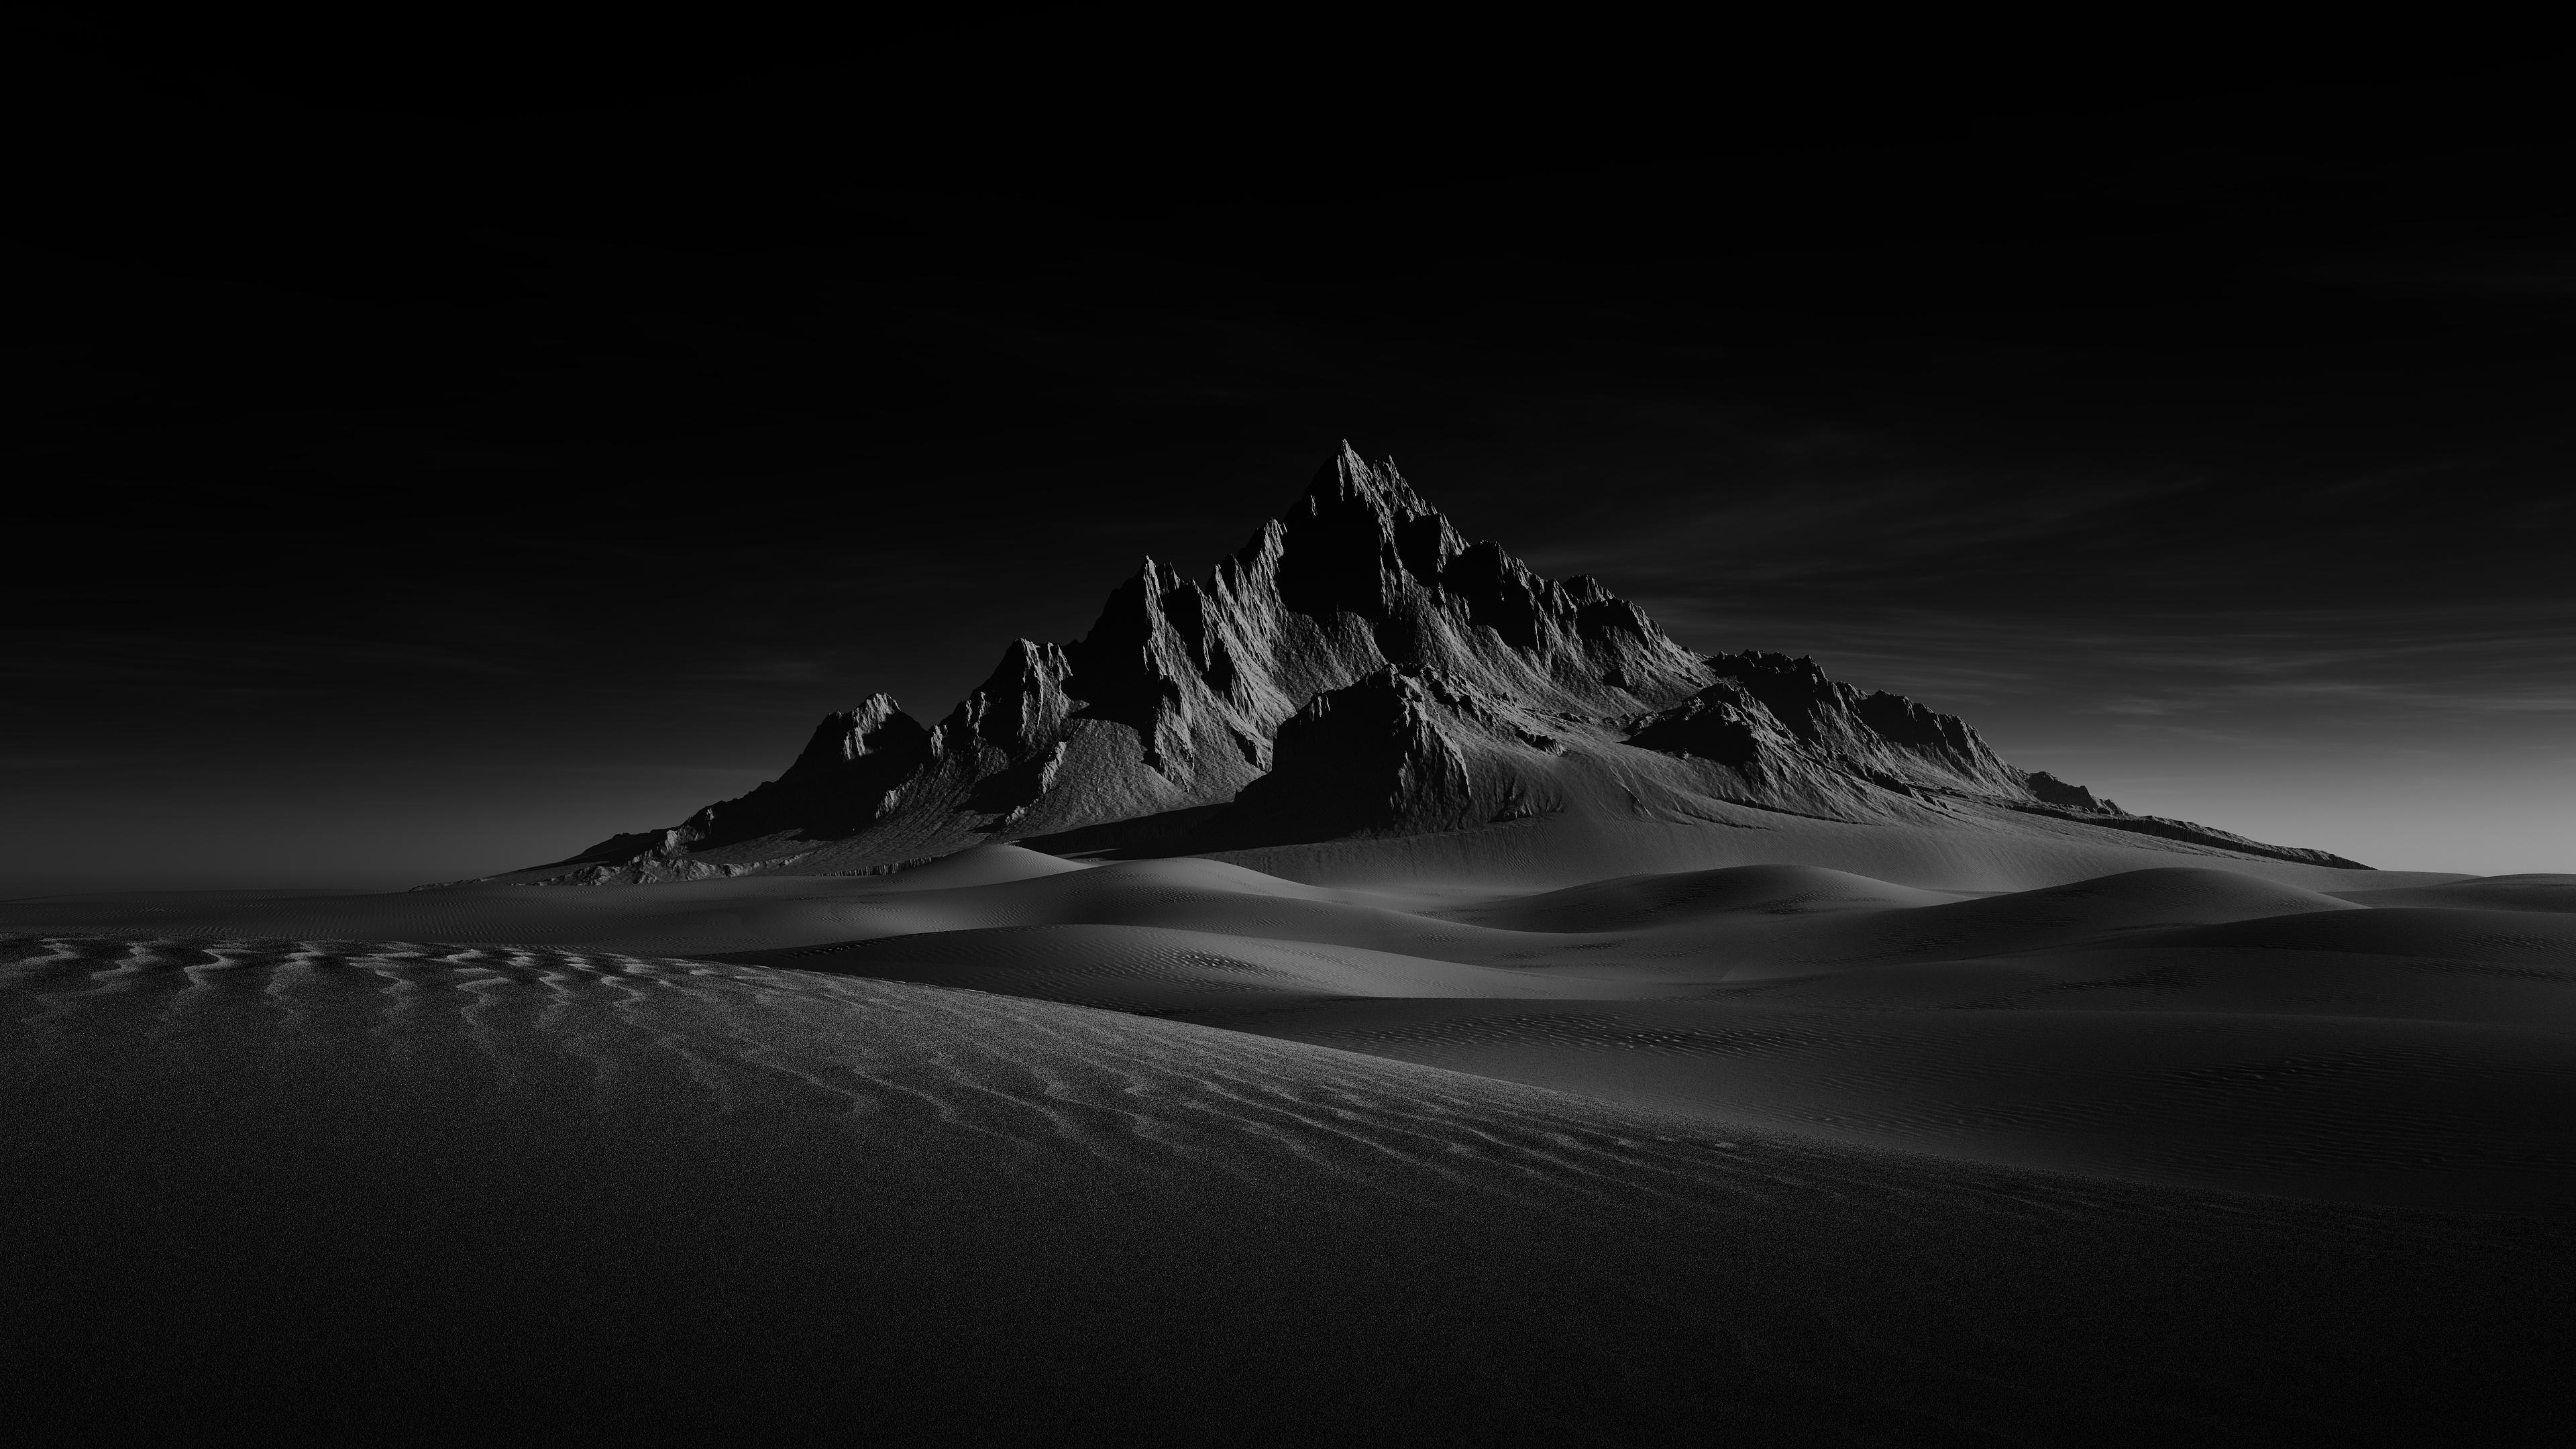 General 3840x2160 nature landscape mountains sand desert sky monochrome